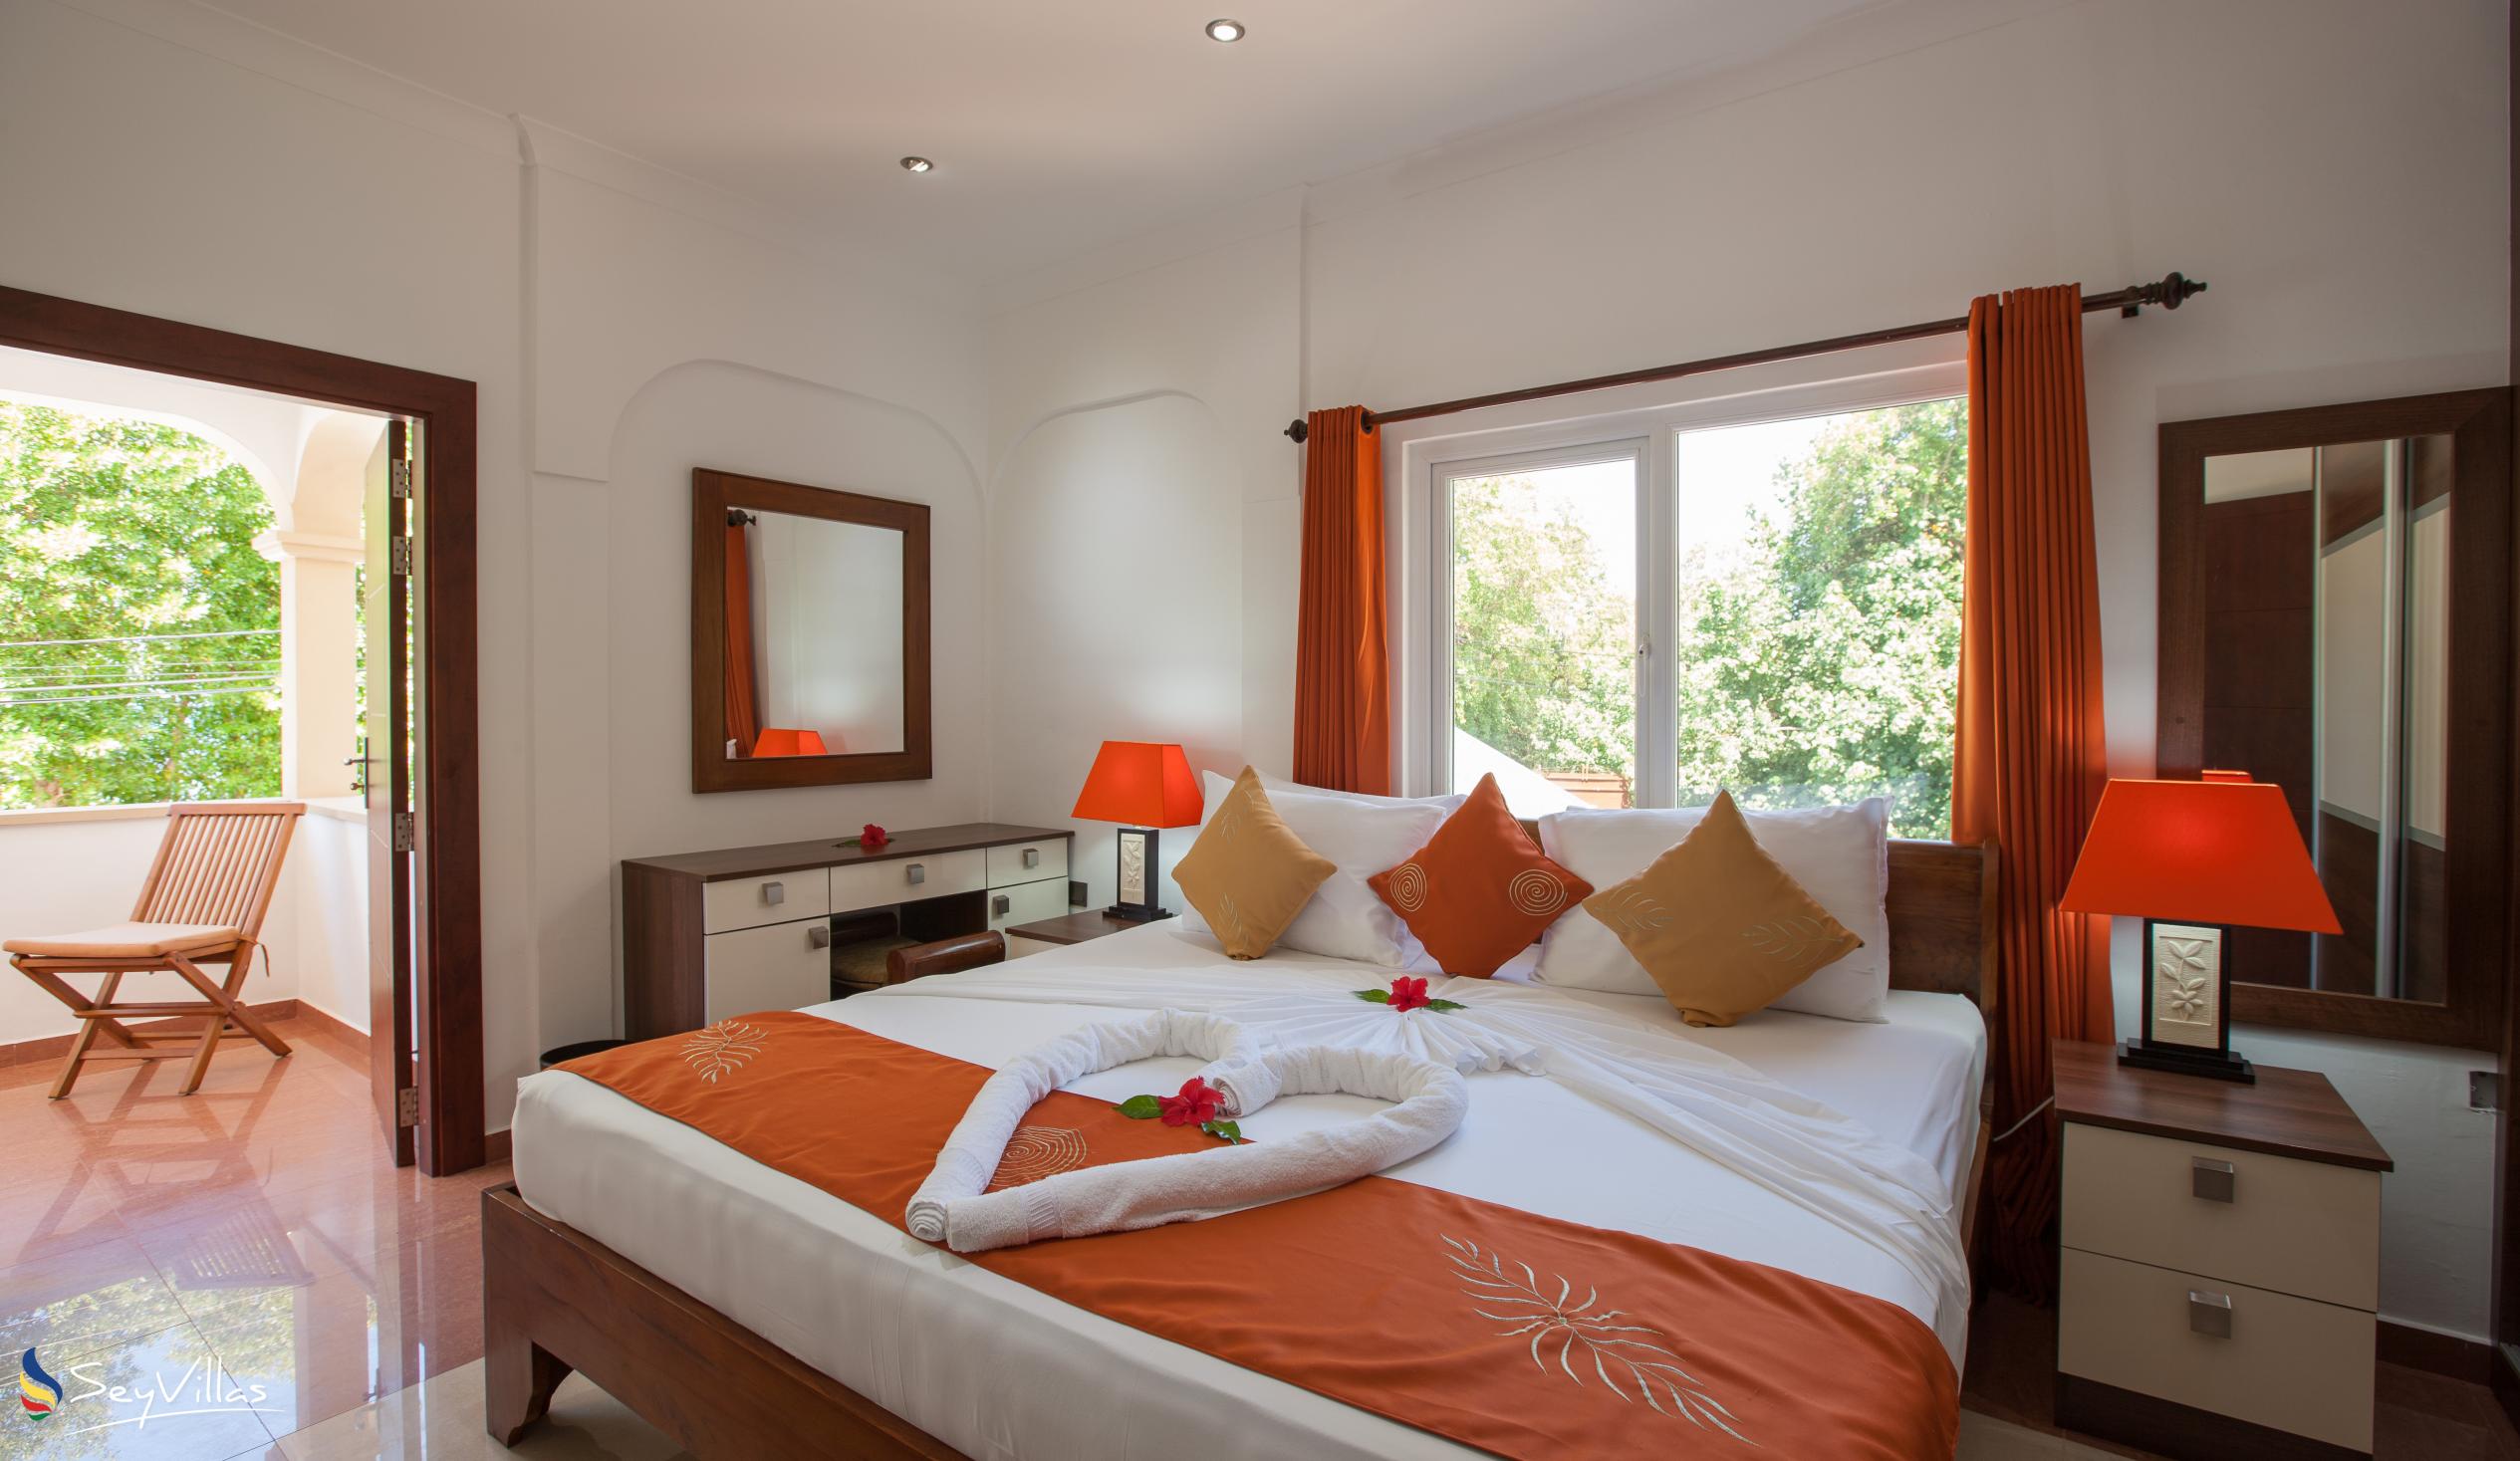 Photo 90: YASAD Luxury Beach Residence - 3-Bedroom Apartment First Floor - Praslin (Seychelles)